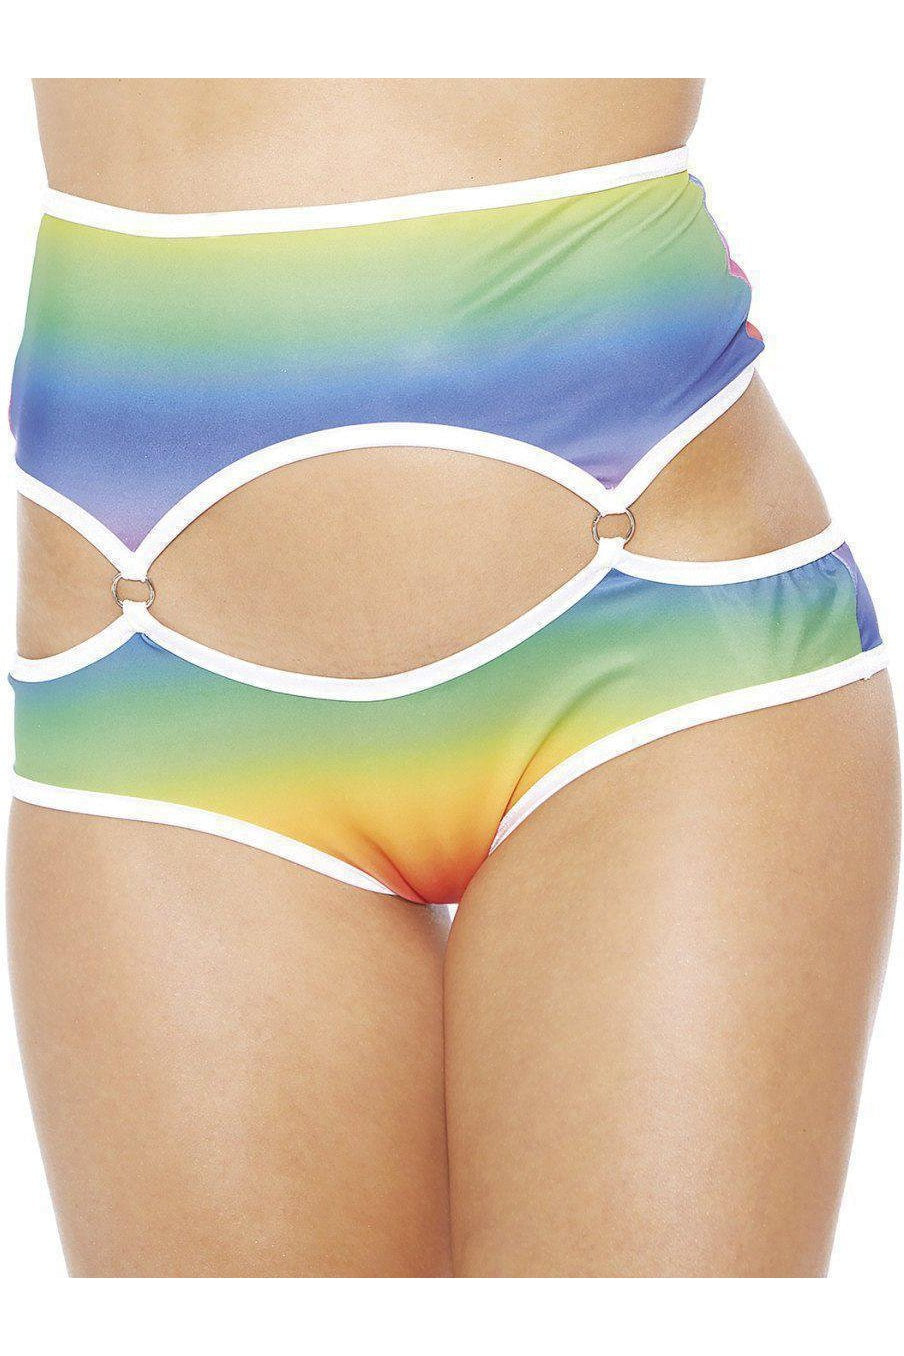 Rainbow Cut Out Short-Booty Shorts-Bodyshotz-Multi-O/S-SEXYSHOES.COM